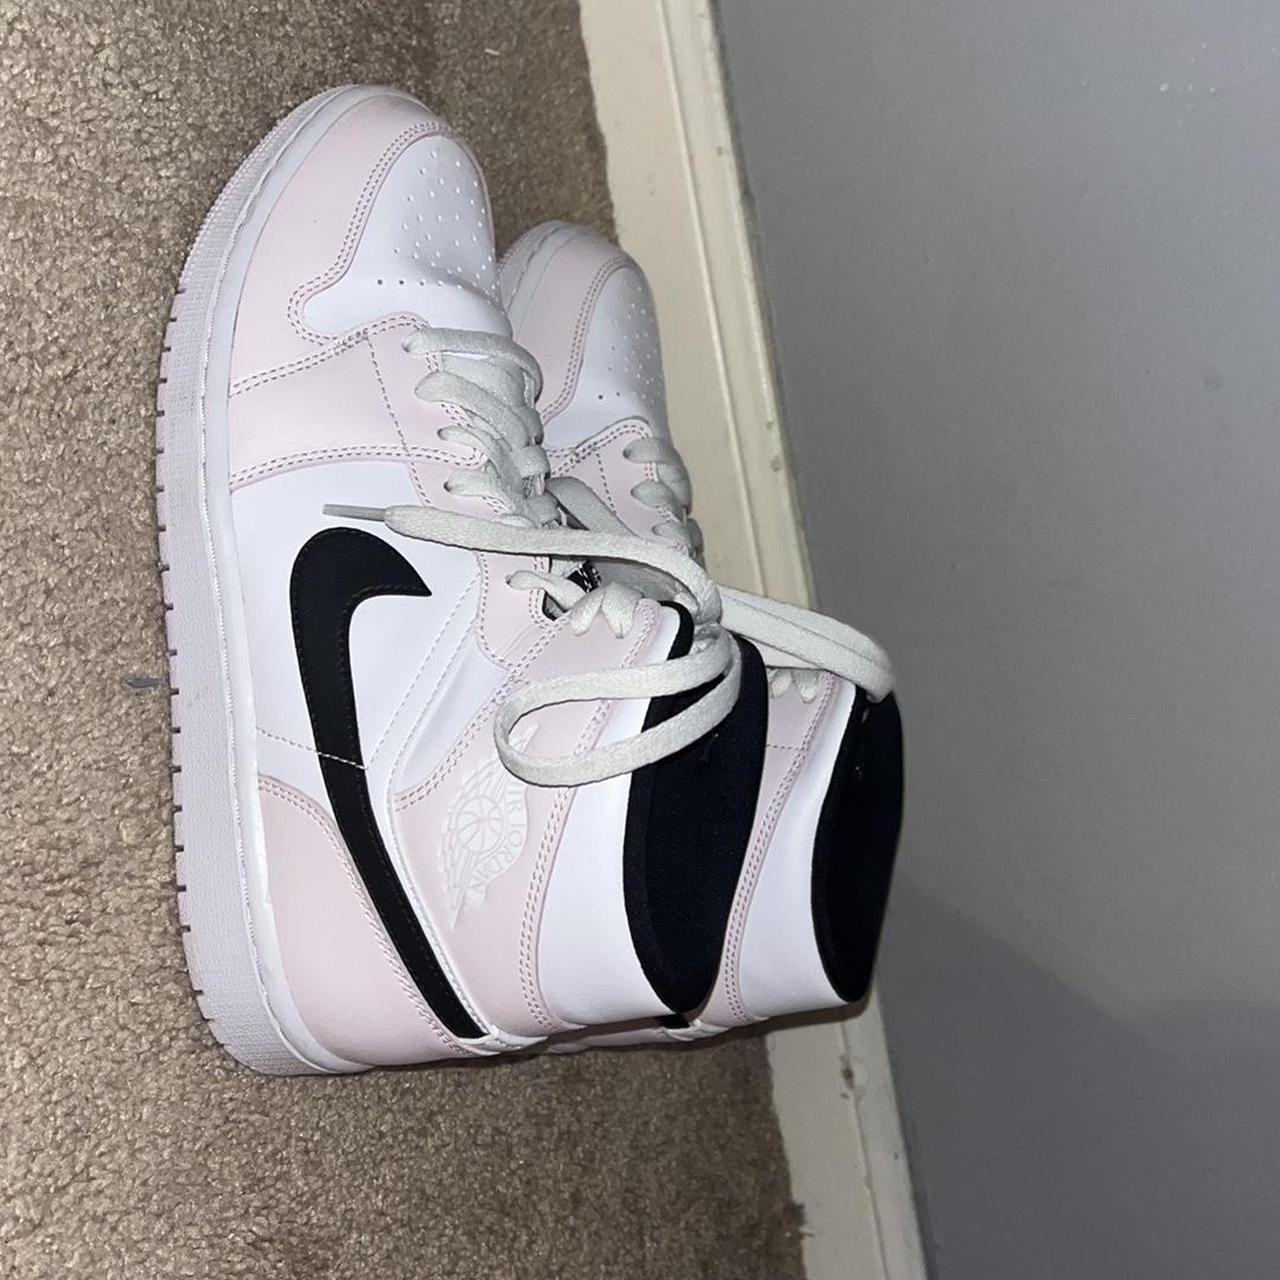 Nike Air Jordan’s Mids - Depop